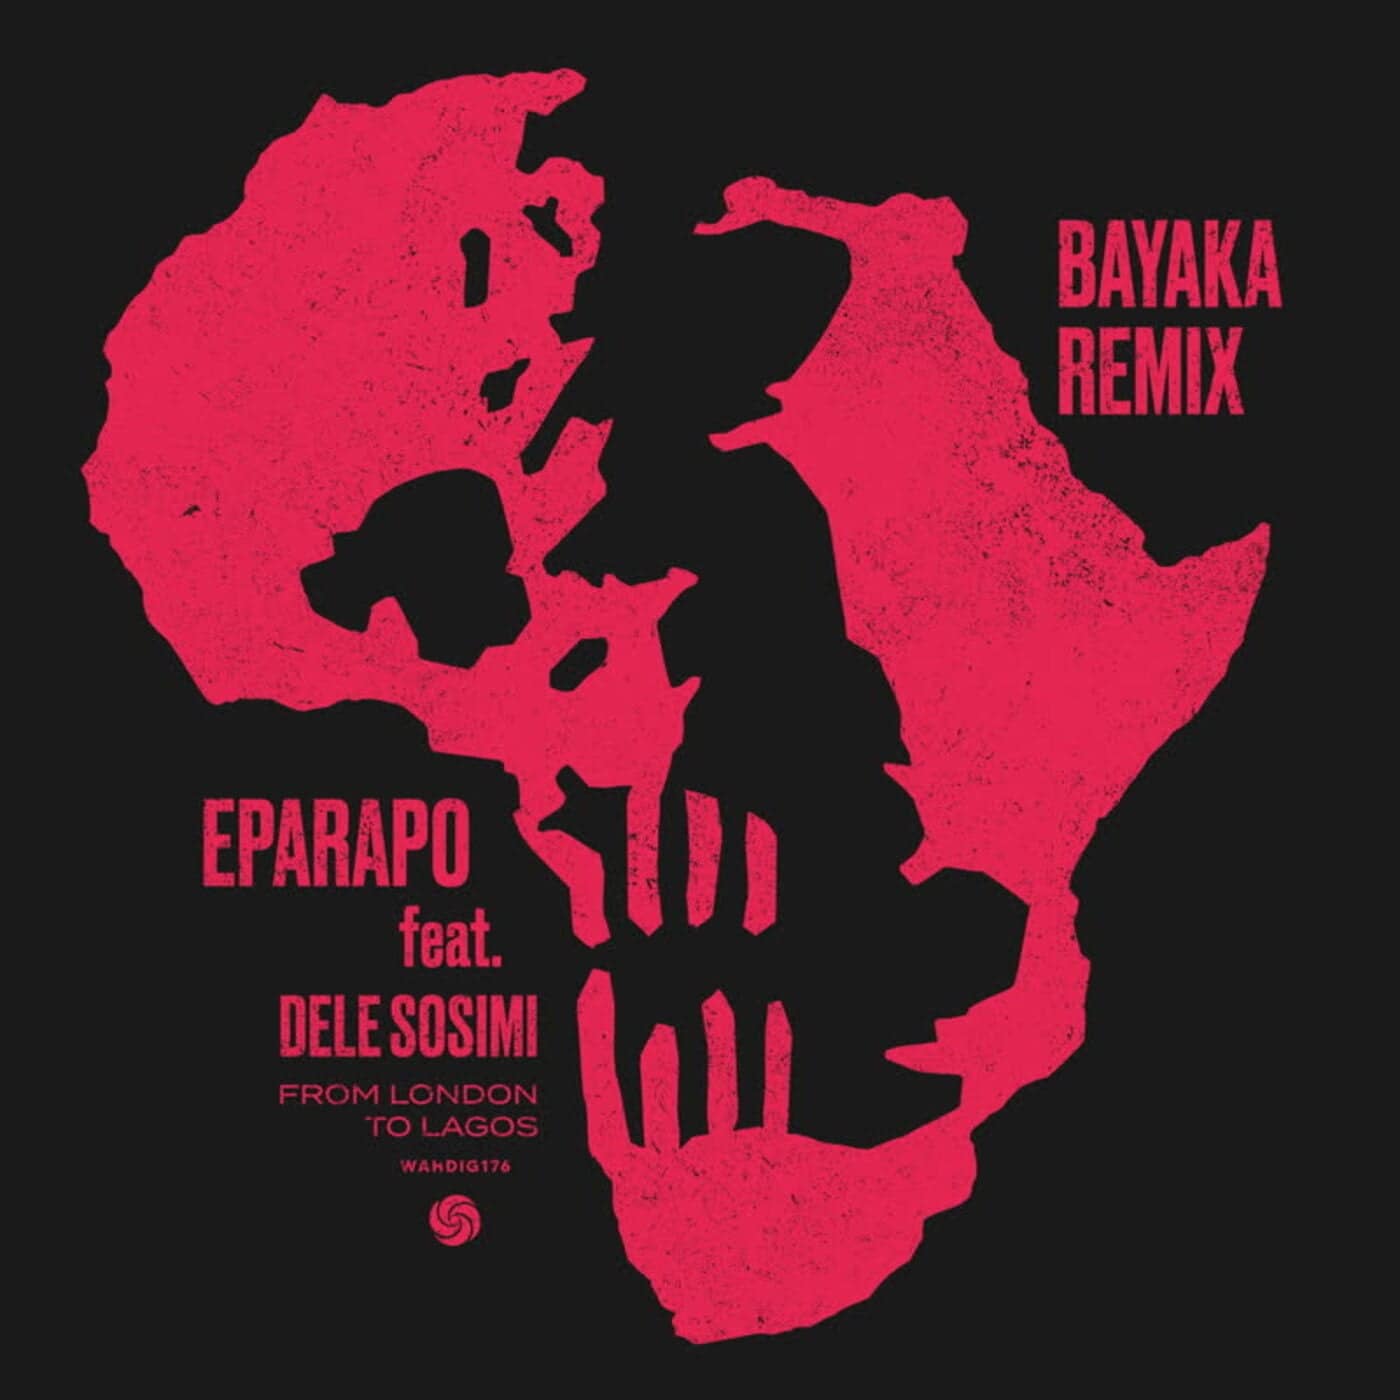 image cover: Dele Sosimi, Eparapo - From London To Lagos (Bayaka Remix) [feat. Dele Sosimi] on Wah Wah 45s